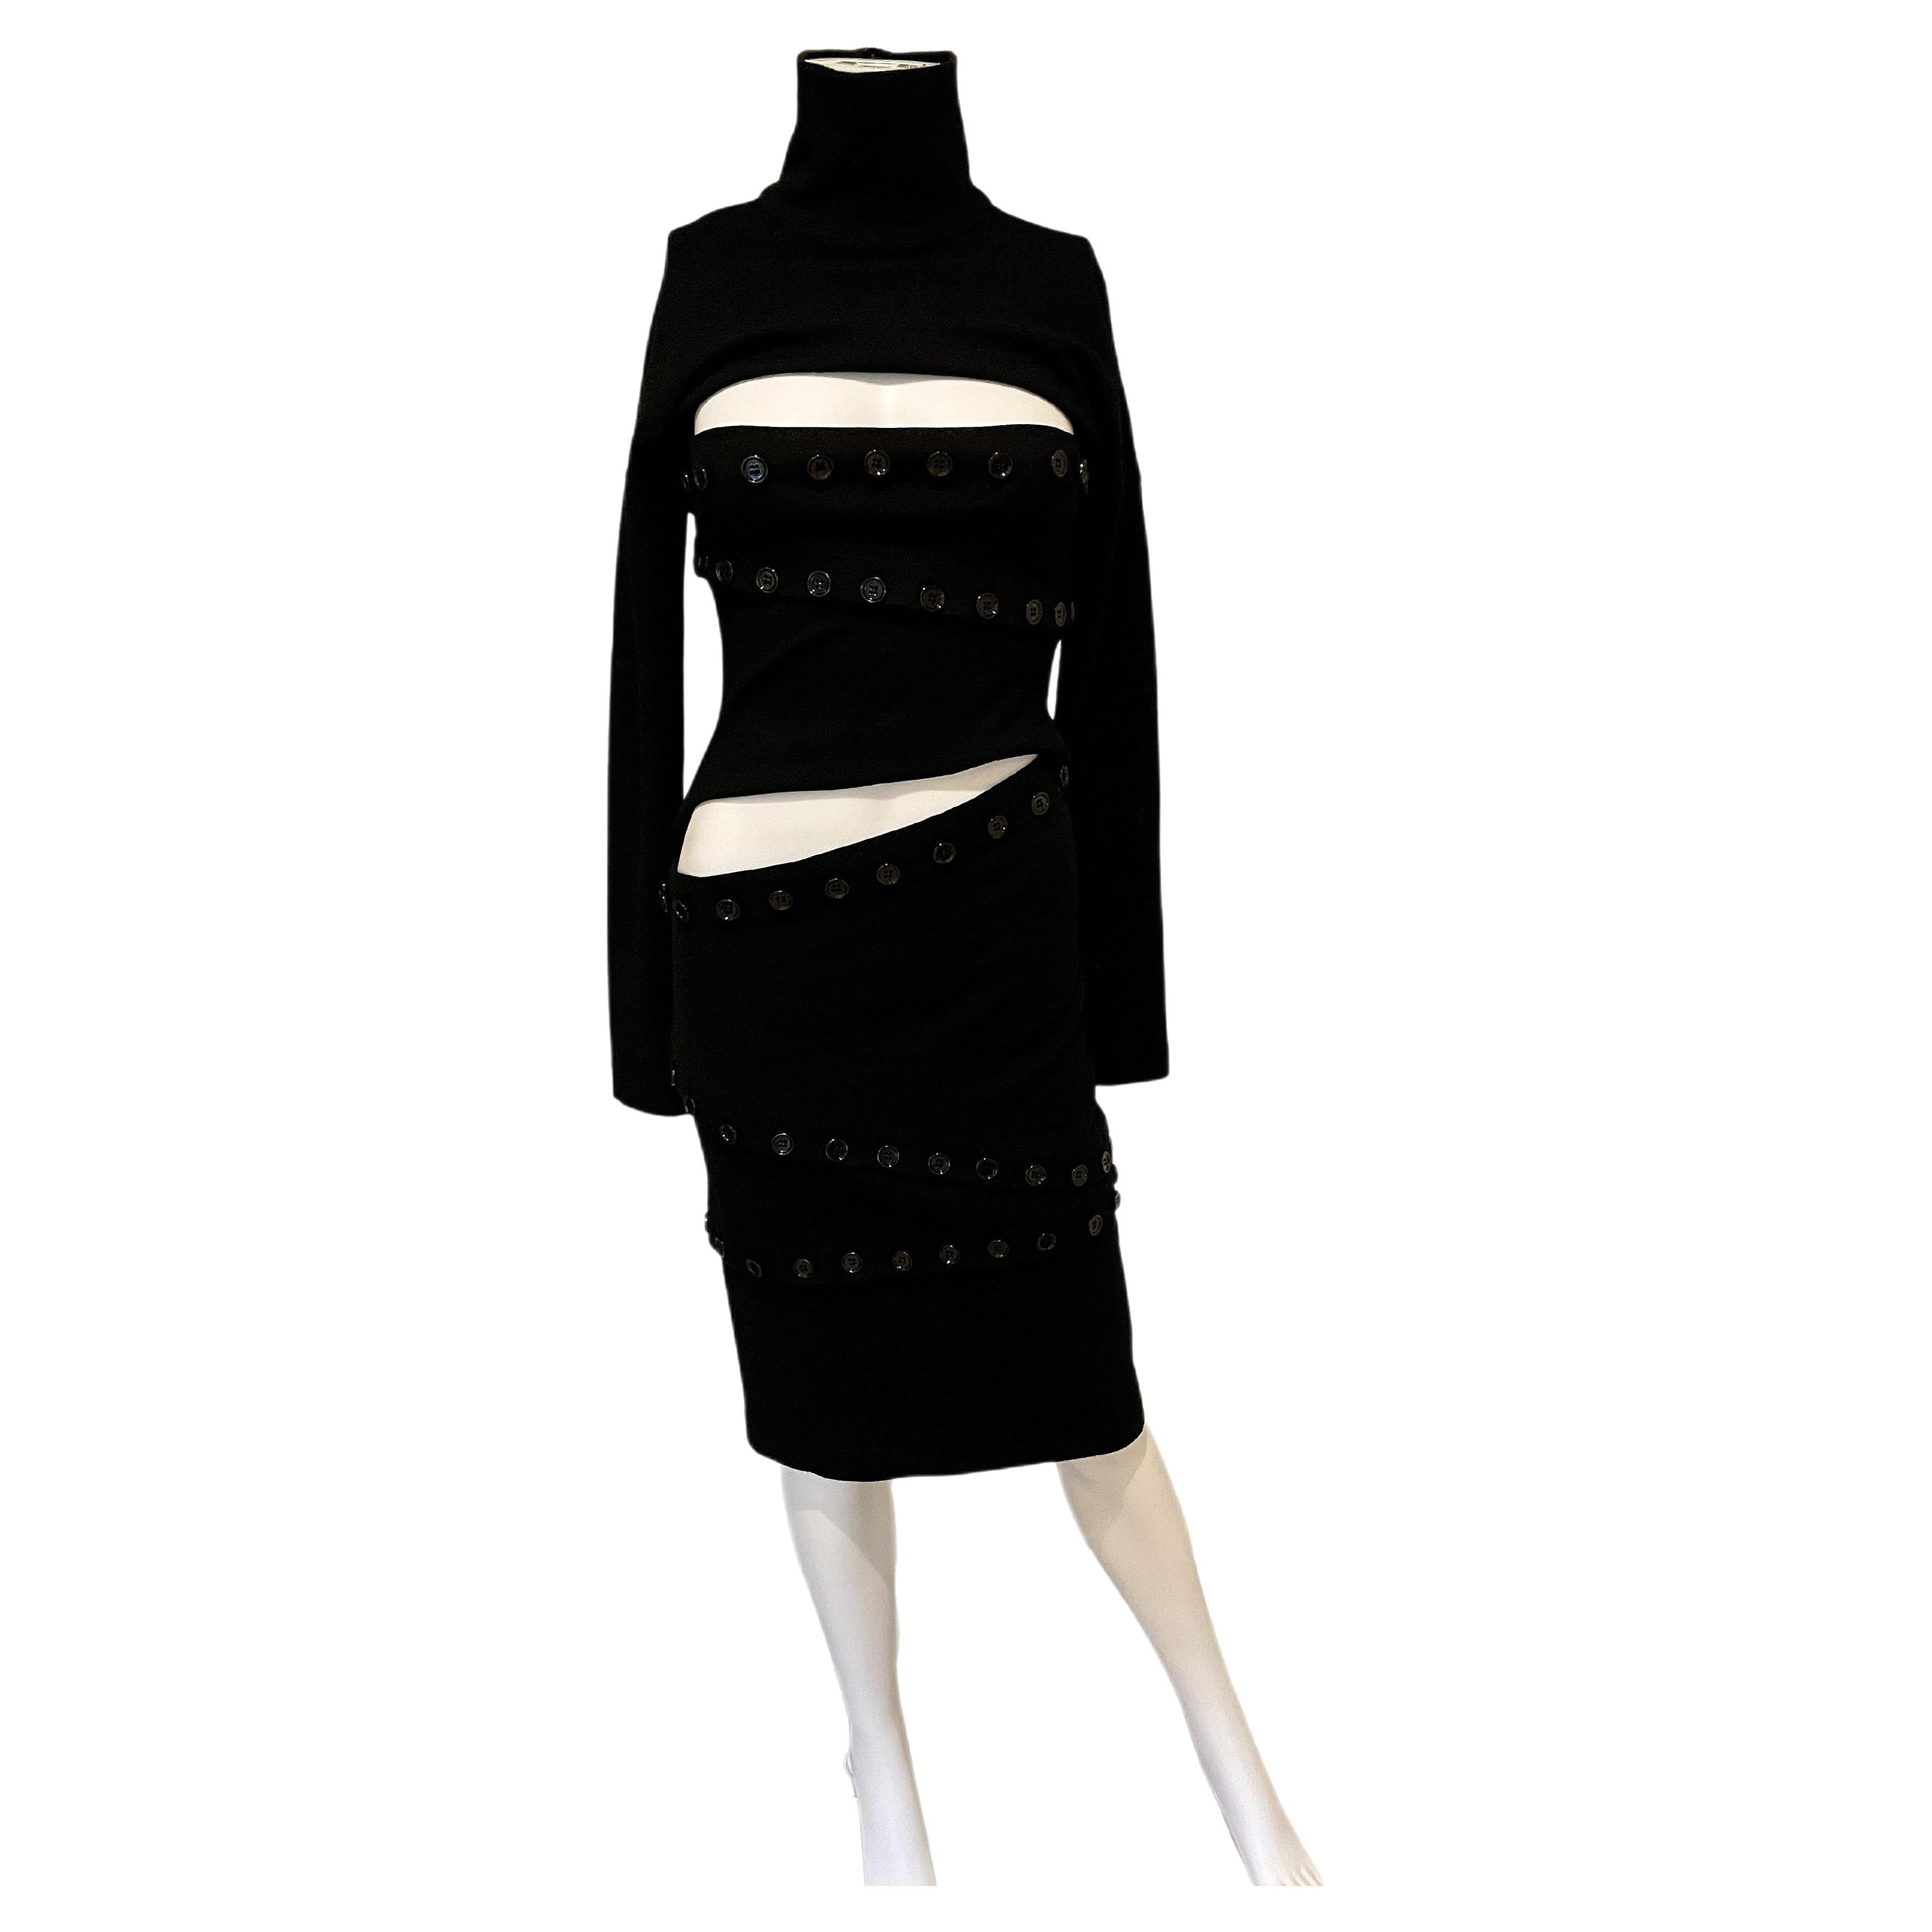 DOLCE & GABBANA 2003 vintage runway black button dress